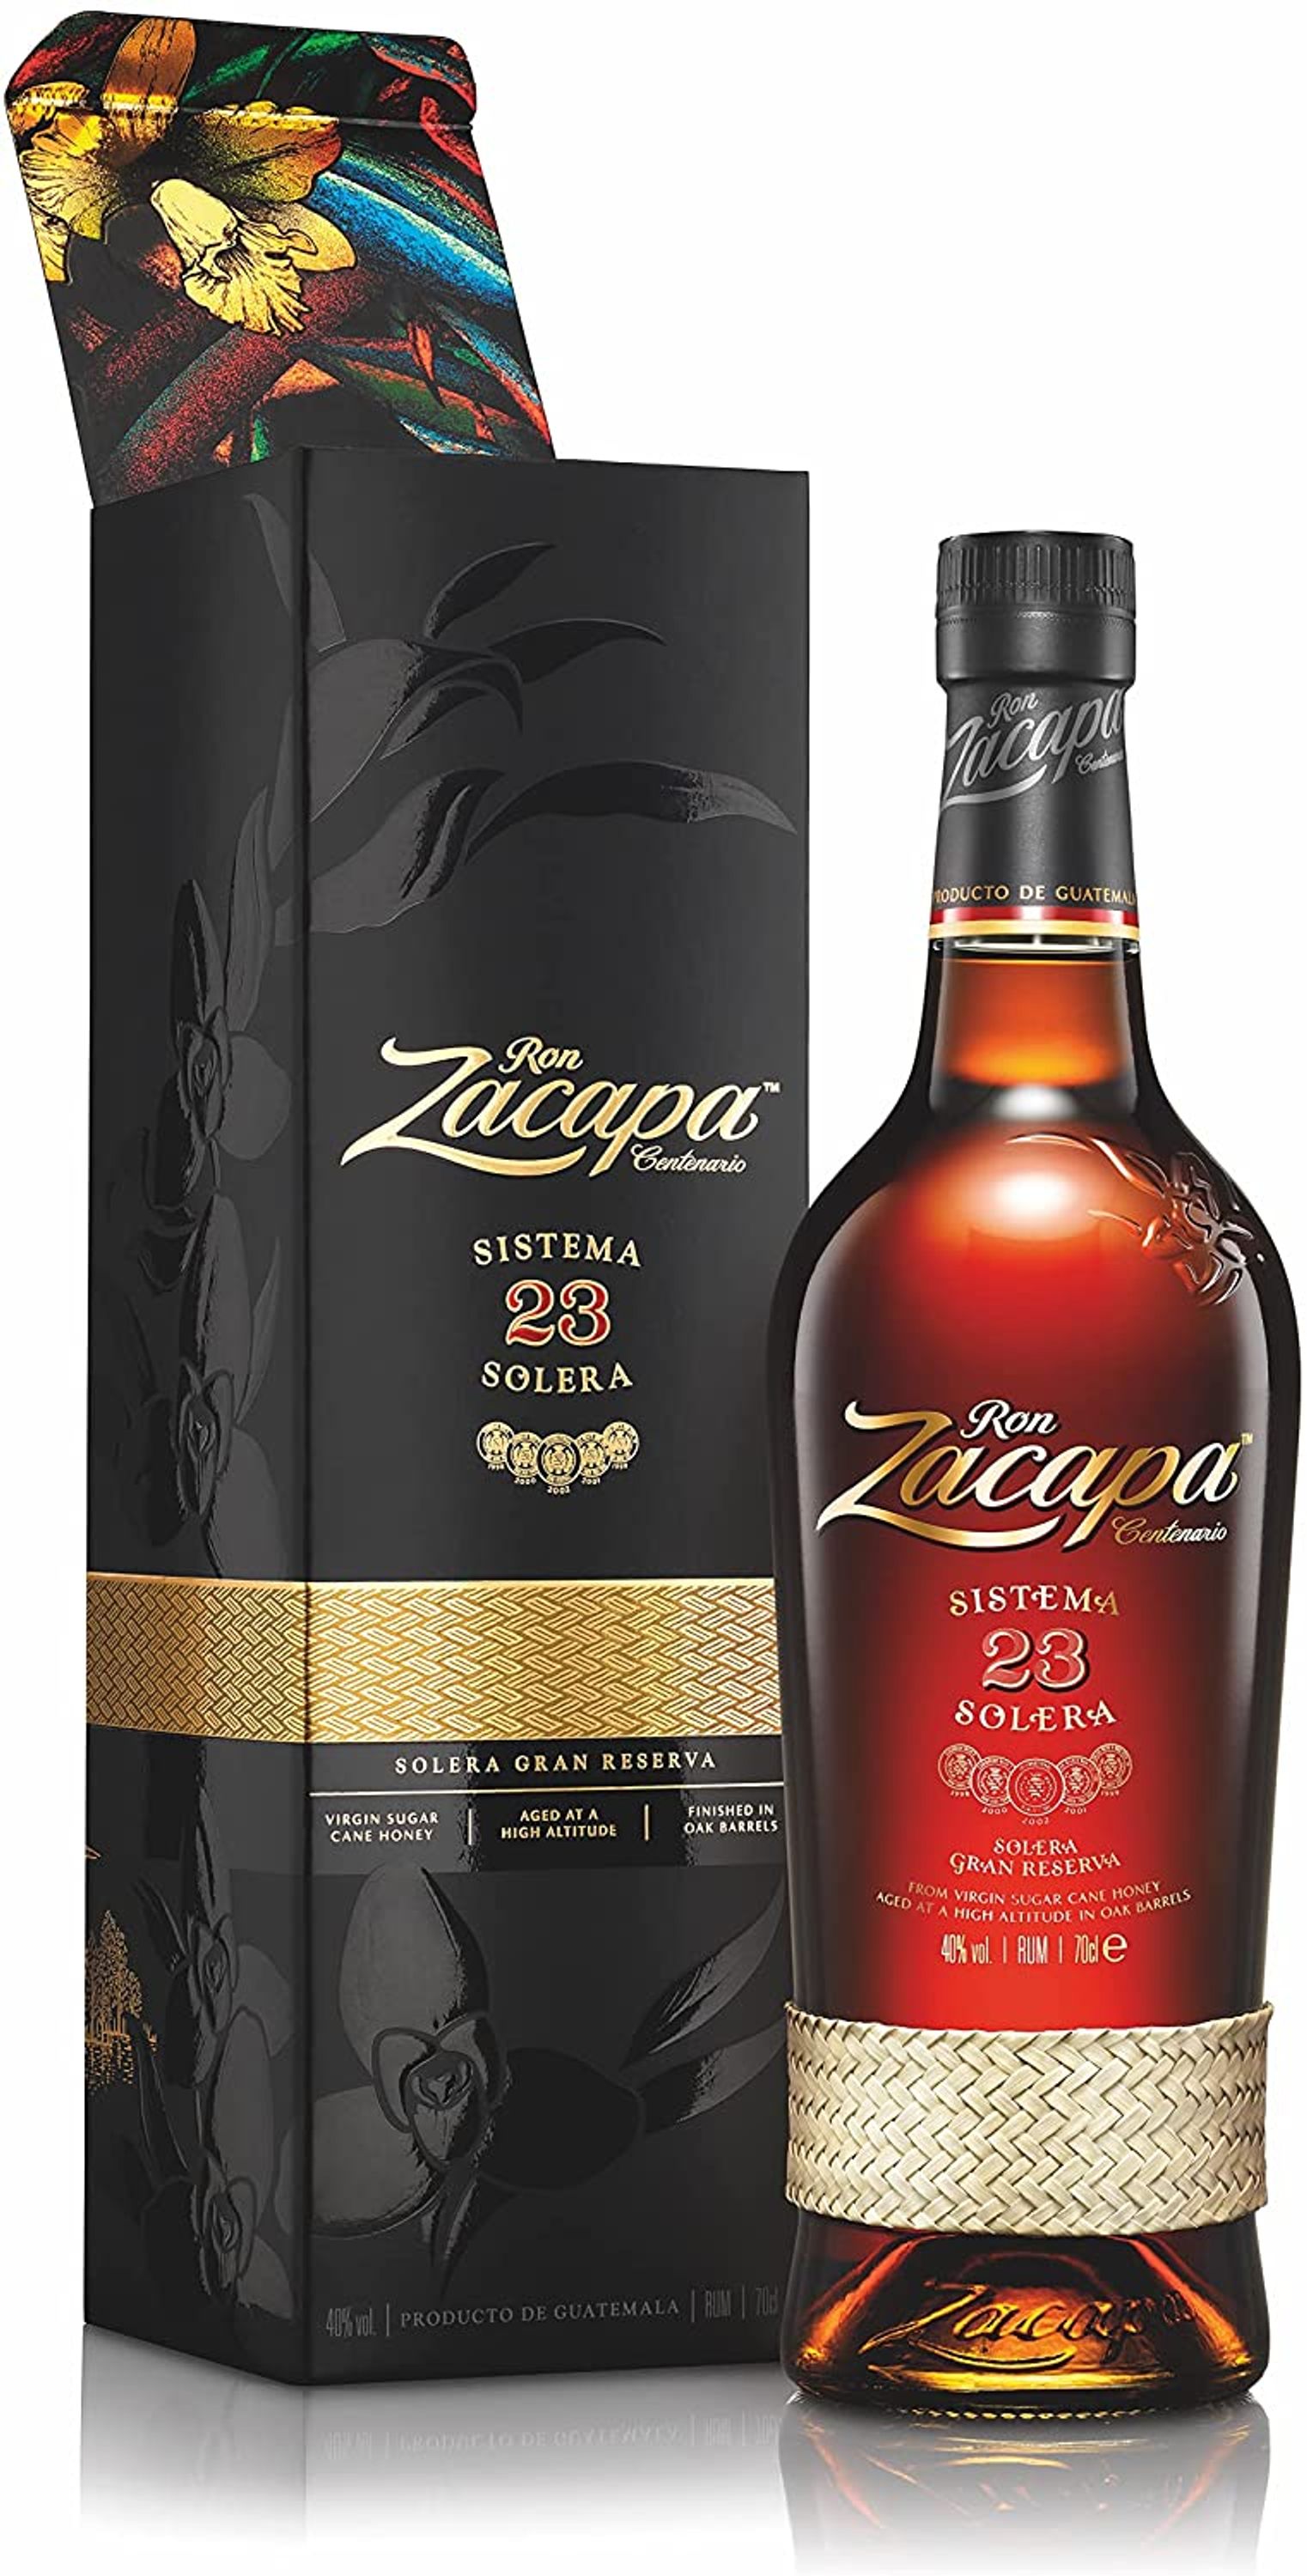 Zacapa 23 Sistema Solera 0.7l, alc. 40% by volume, Rum Guatemala